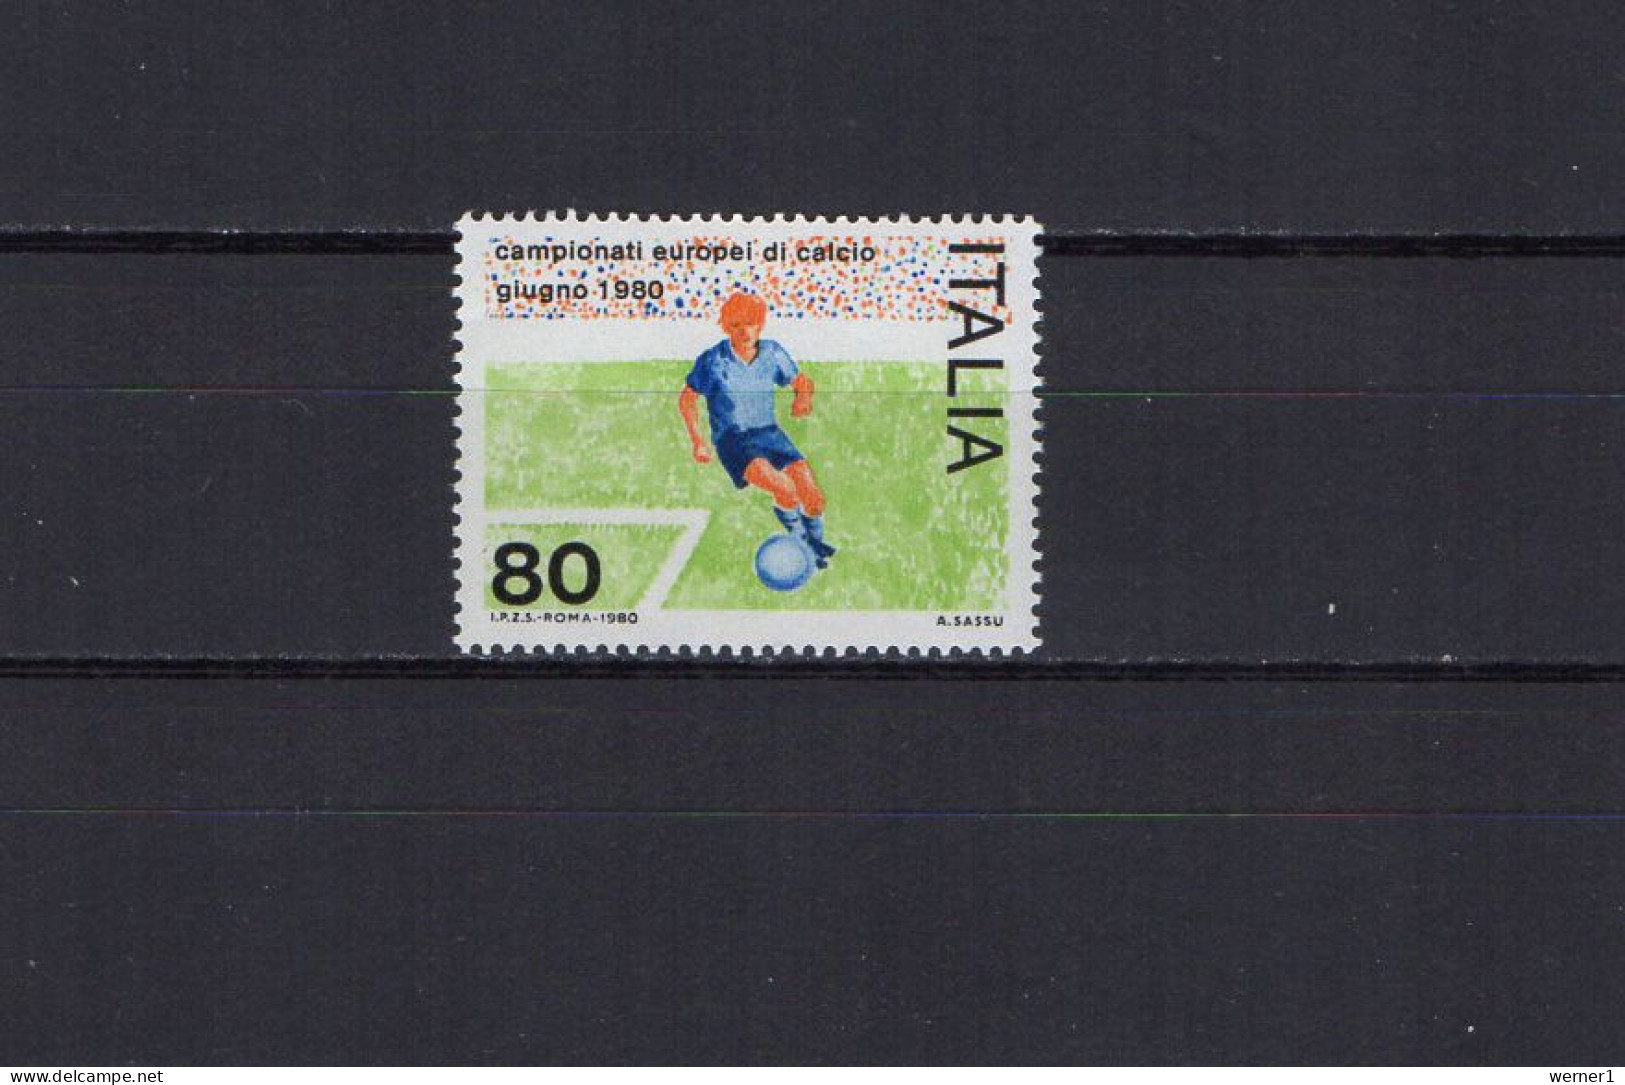 Italy 1980 Football Soccer European Championship Stamp MNH - Europei Di Calcio (UEFA)